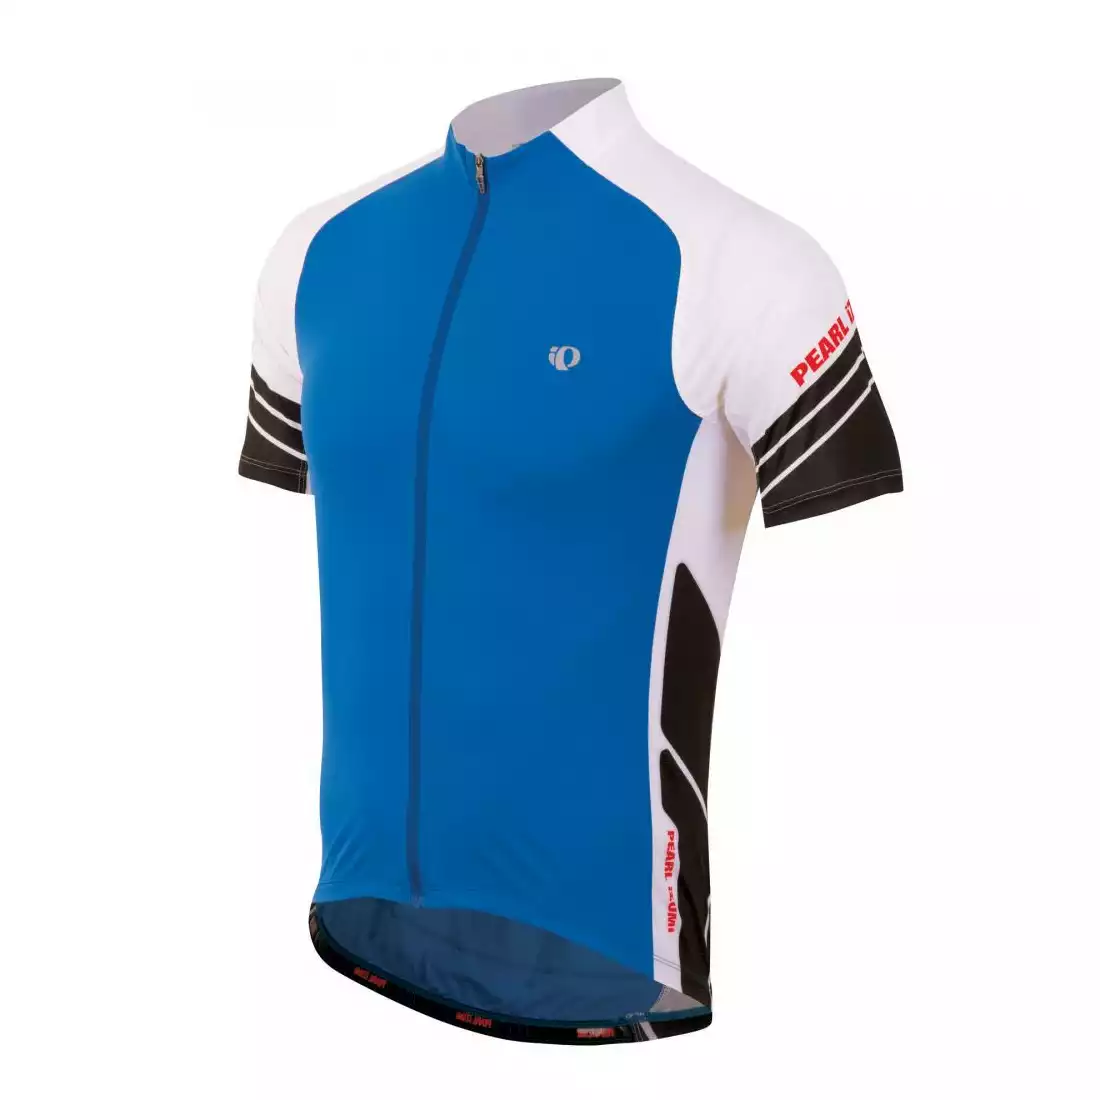 PEARL IZUMI - ELITE 11121301-3DQ - lekka koszulka rowerowa, niebieska